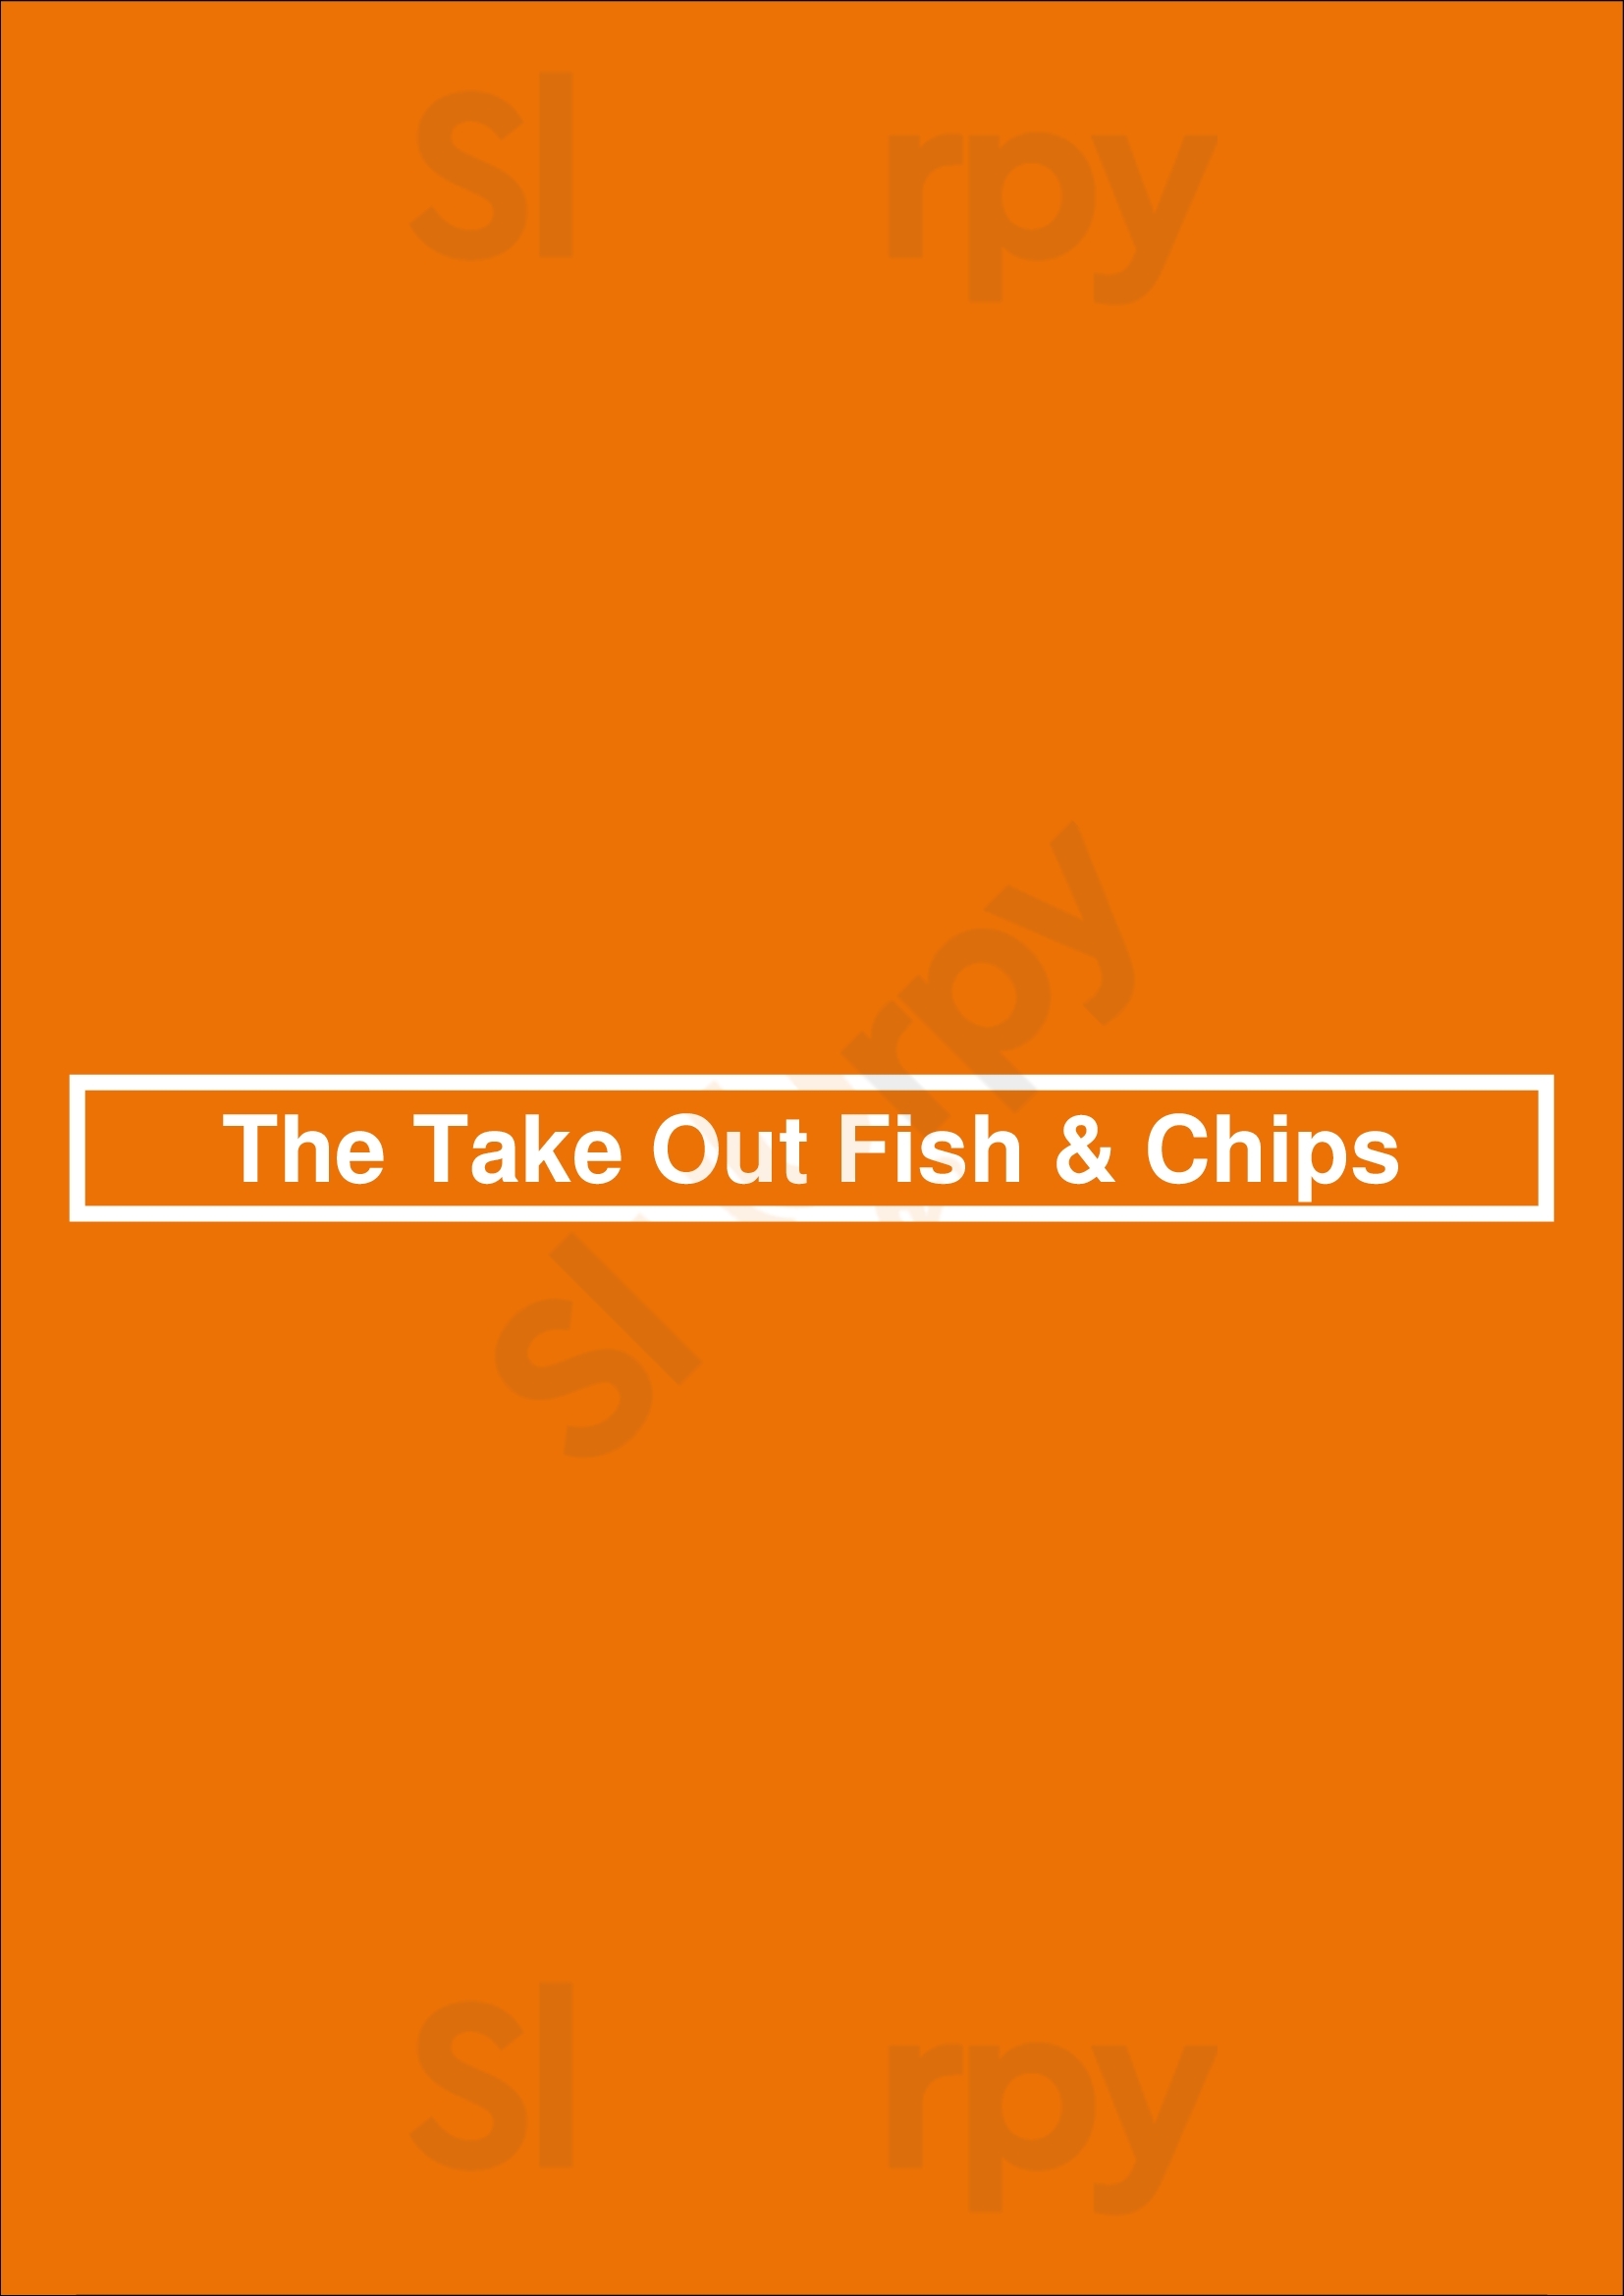 The Take Out Fish & Chips London Menu - 1